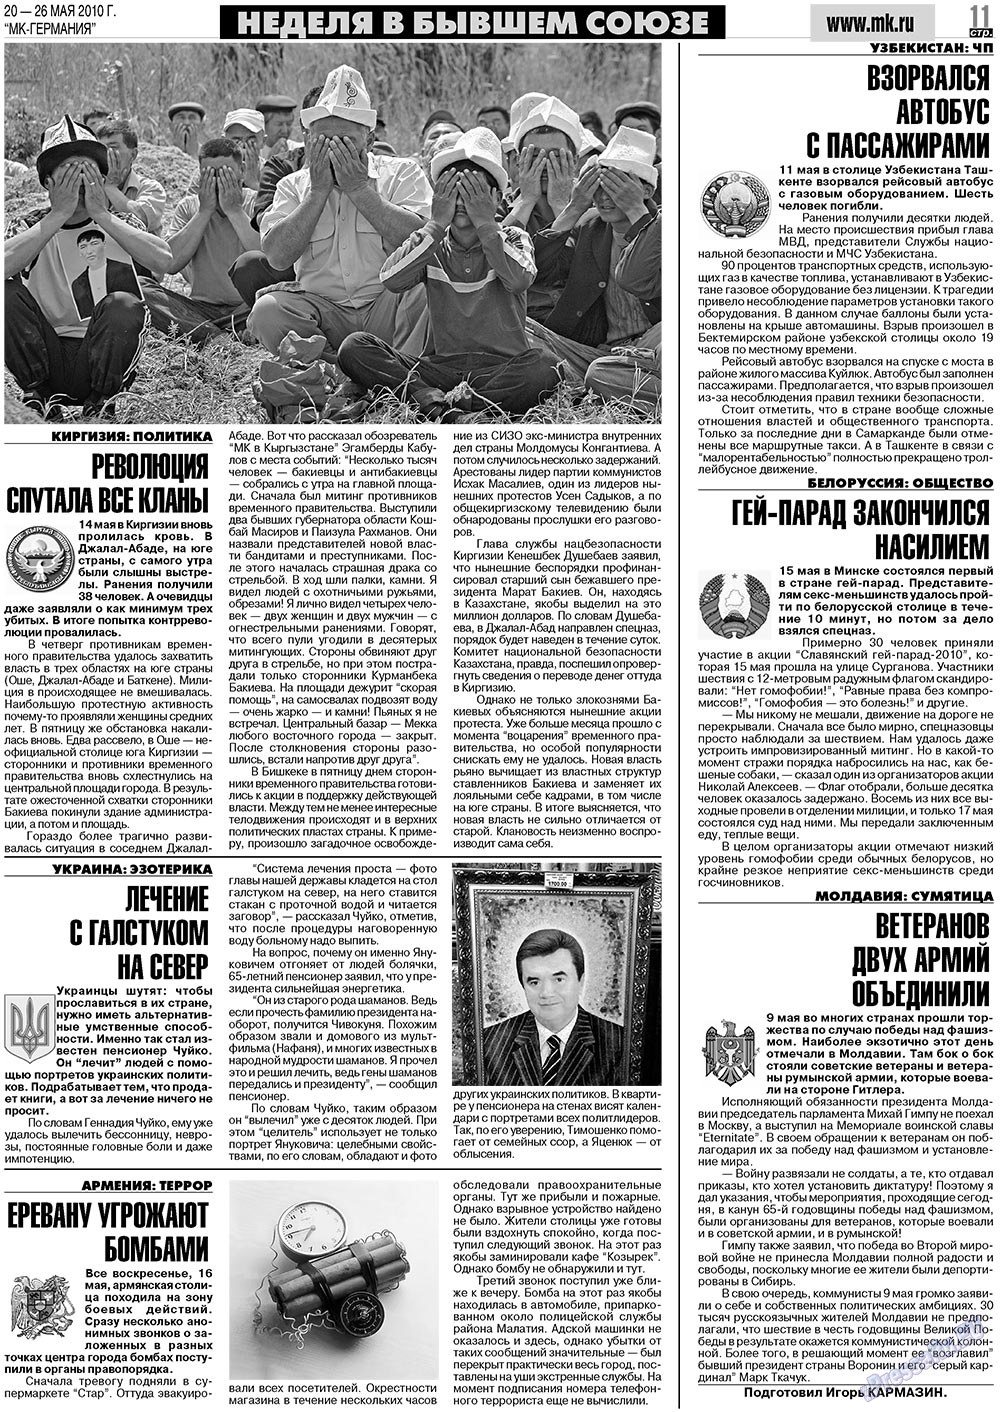 МК-Германия, газета. 2010 №21 стр.11